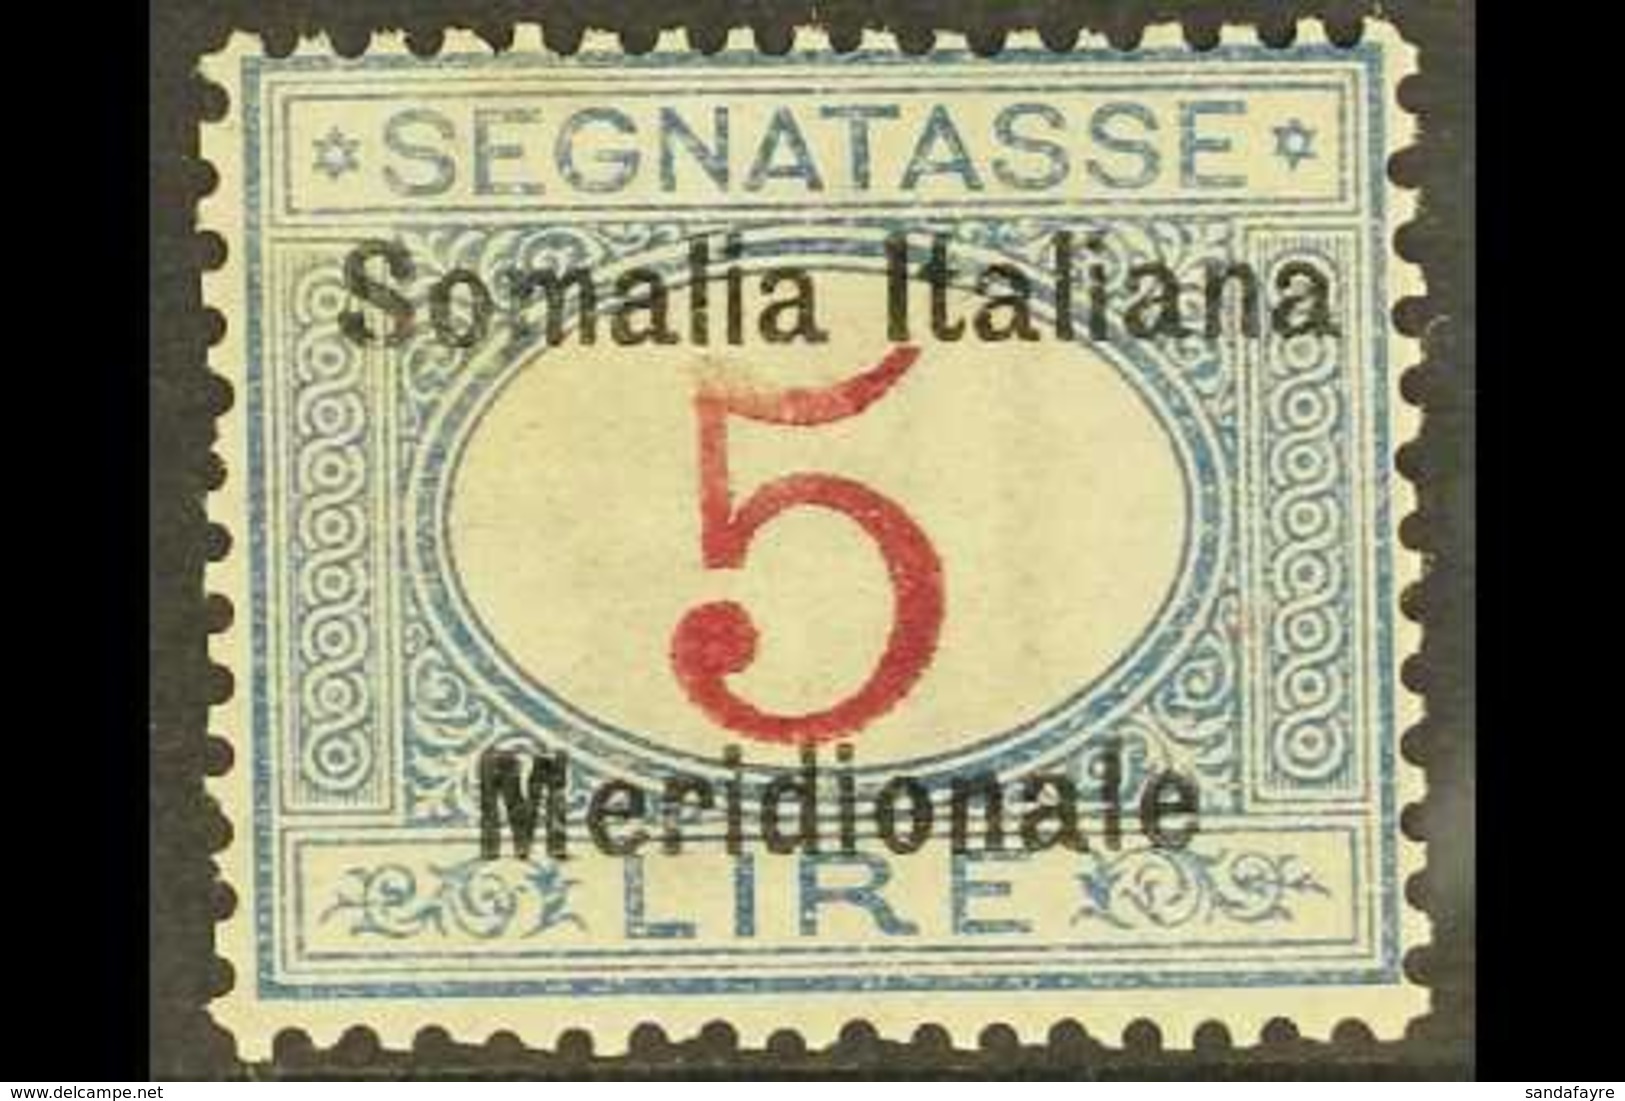 SOMALIA POSTAGE DUE 1906 5L Magenta & Blue "Somalia Italiana Meridionale" Overprint (Sassone 10, SG D26), Fine Mint, Exp - Altri & Non Classificati